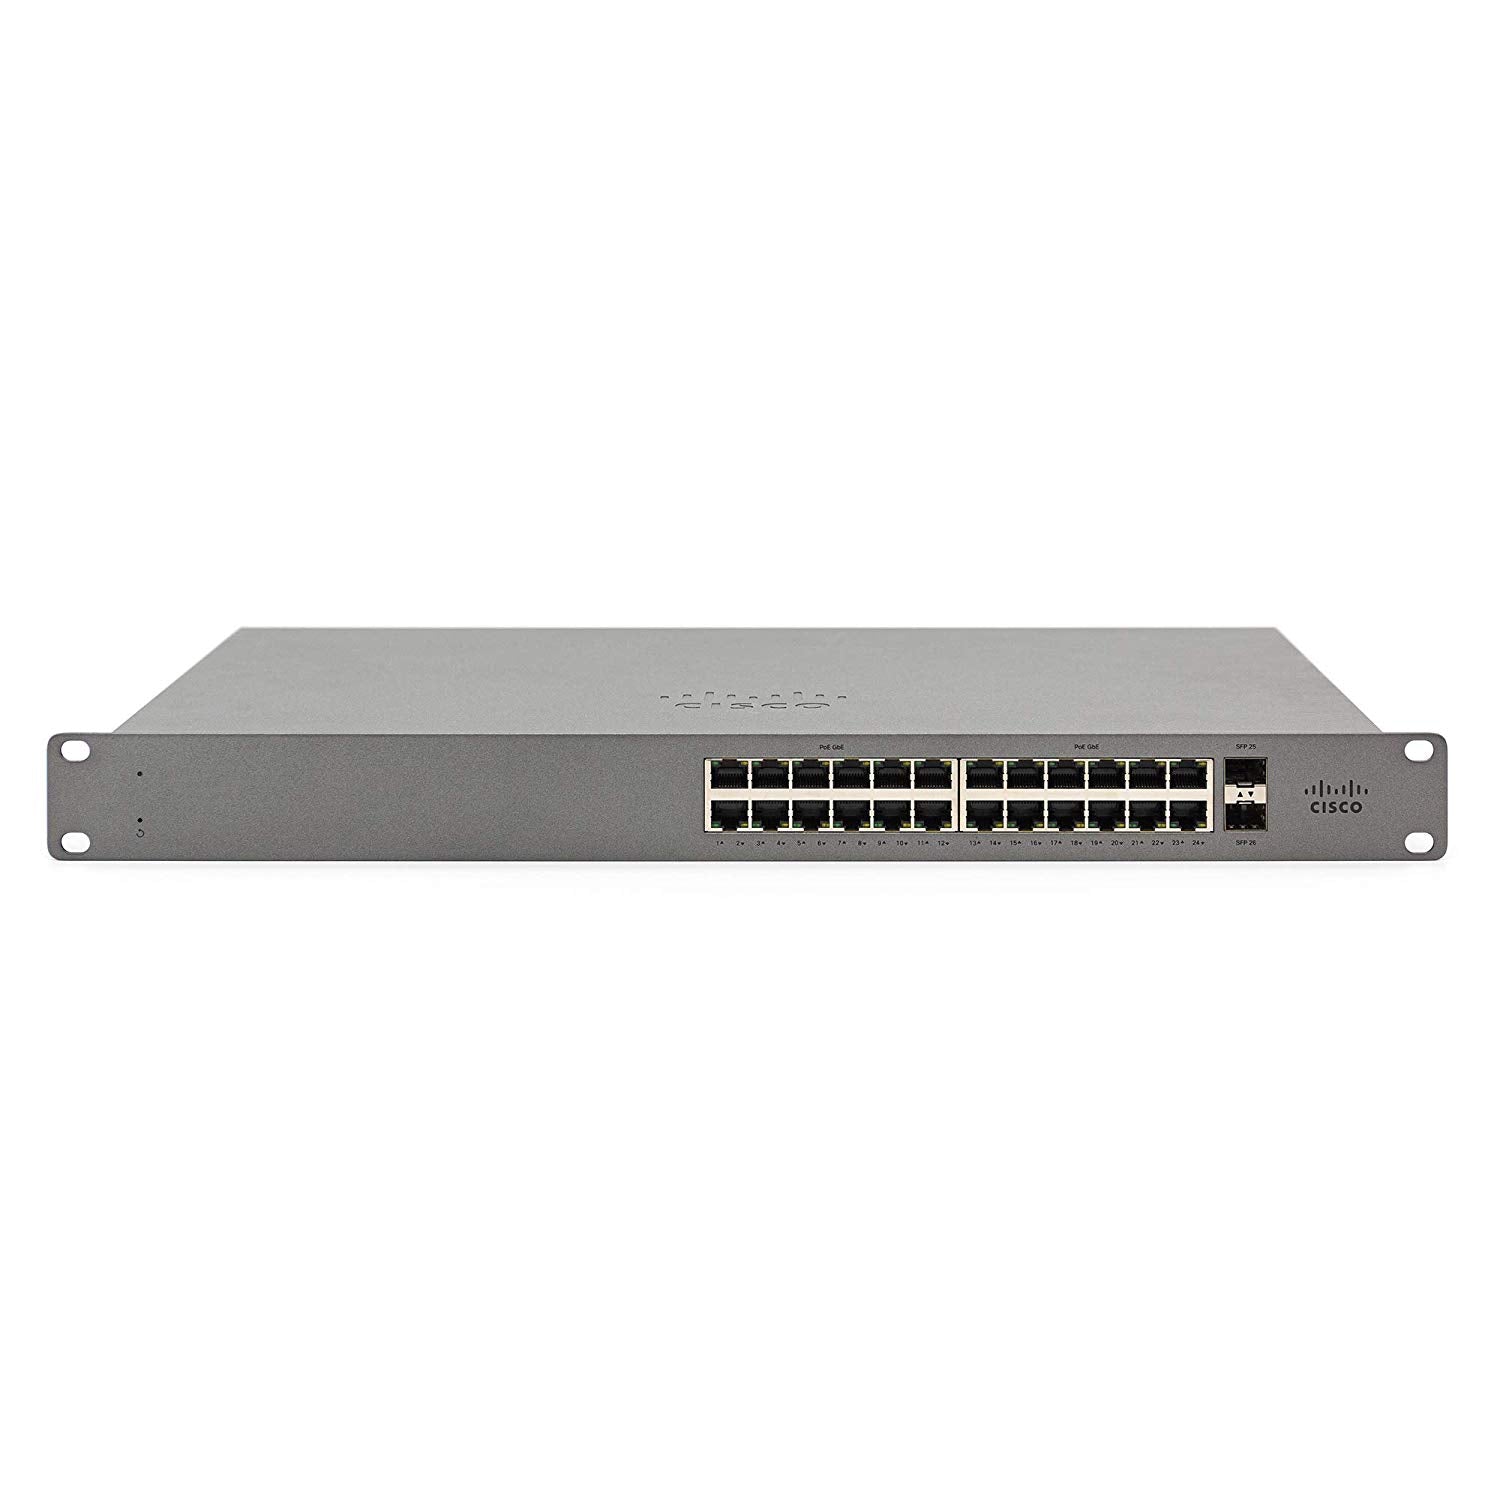 Cisco Meraki Unclaimed Cloud Managed 24 Port PoE Gigabit Switch - MS12